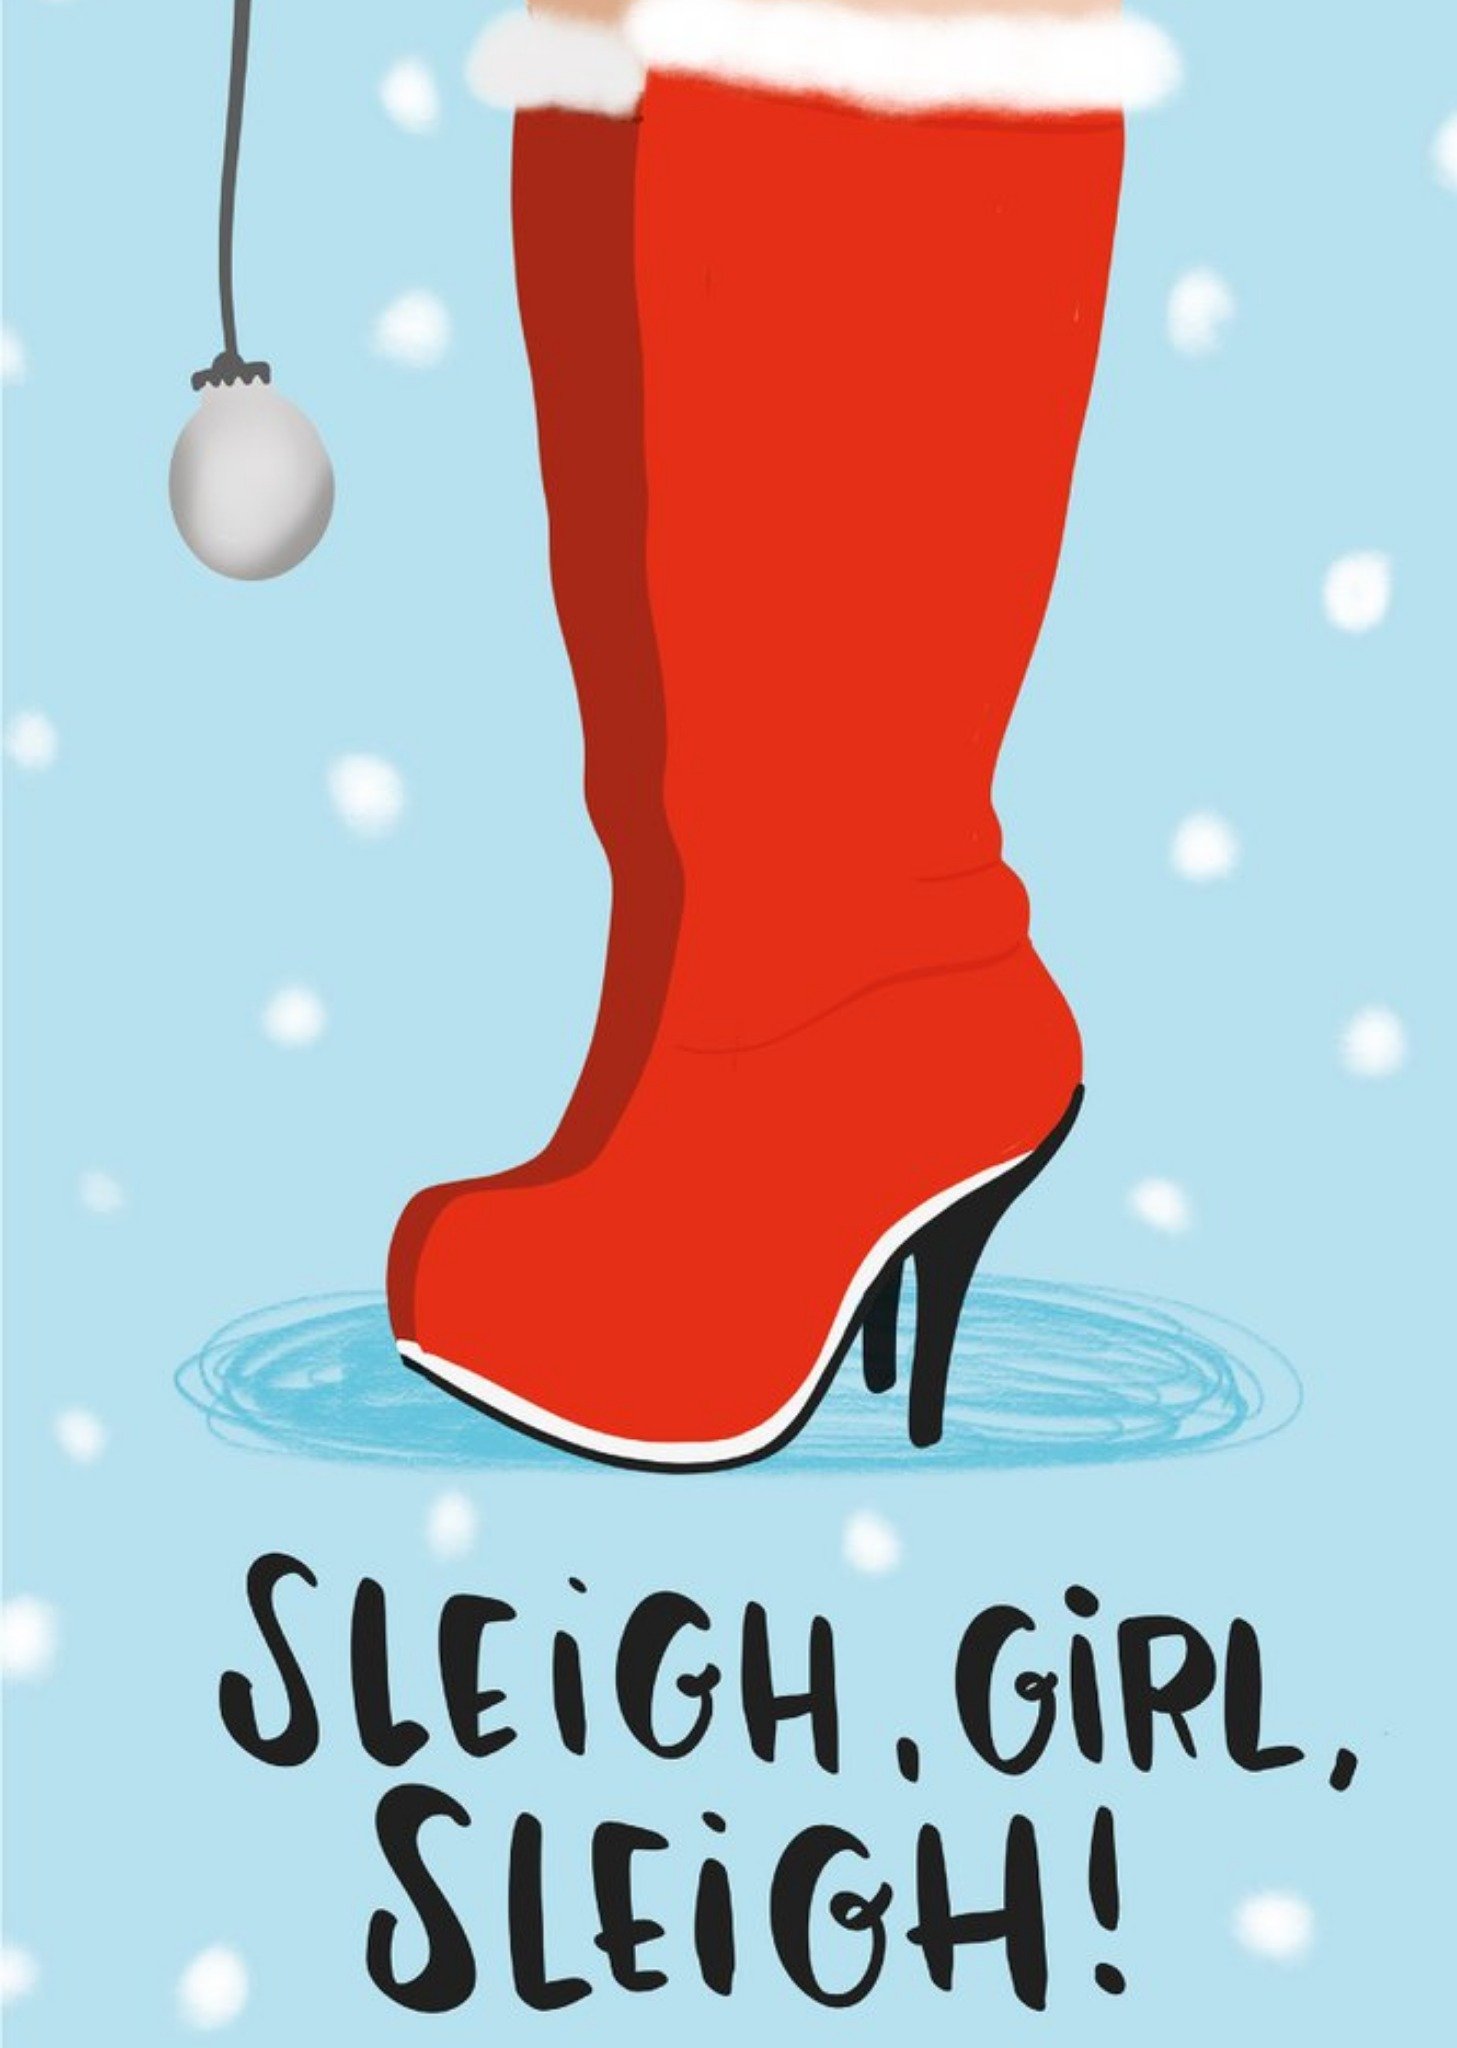 Moonpig Modern Fun Illustration Sleigh Girl Sleigh Christmas Card, Large